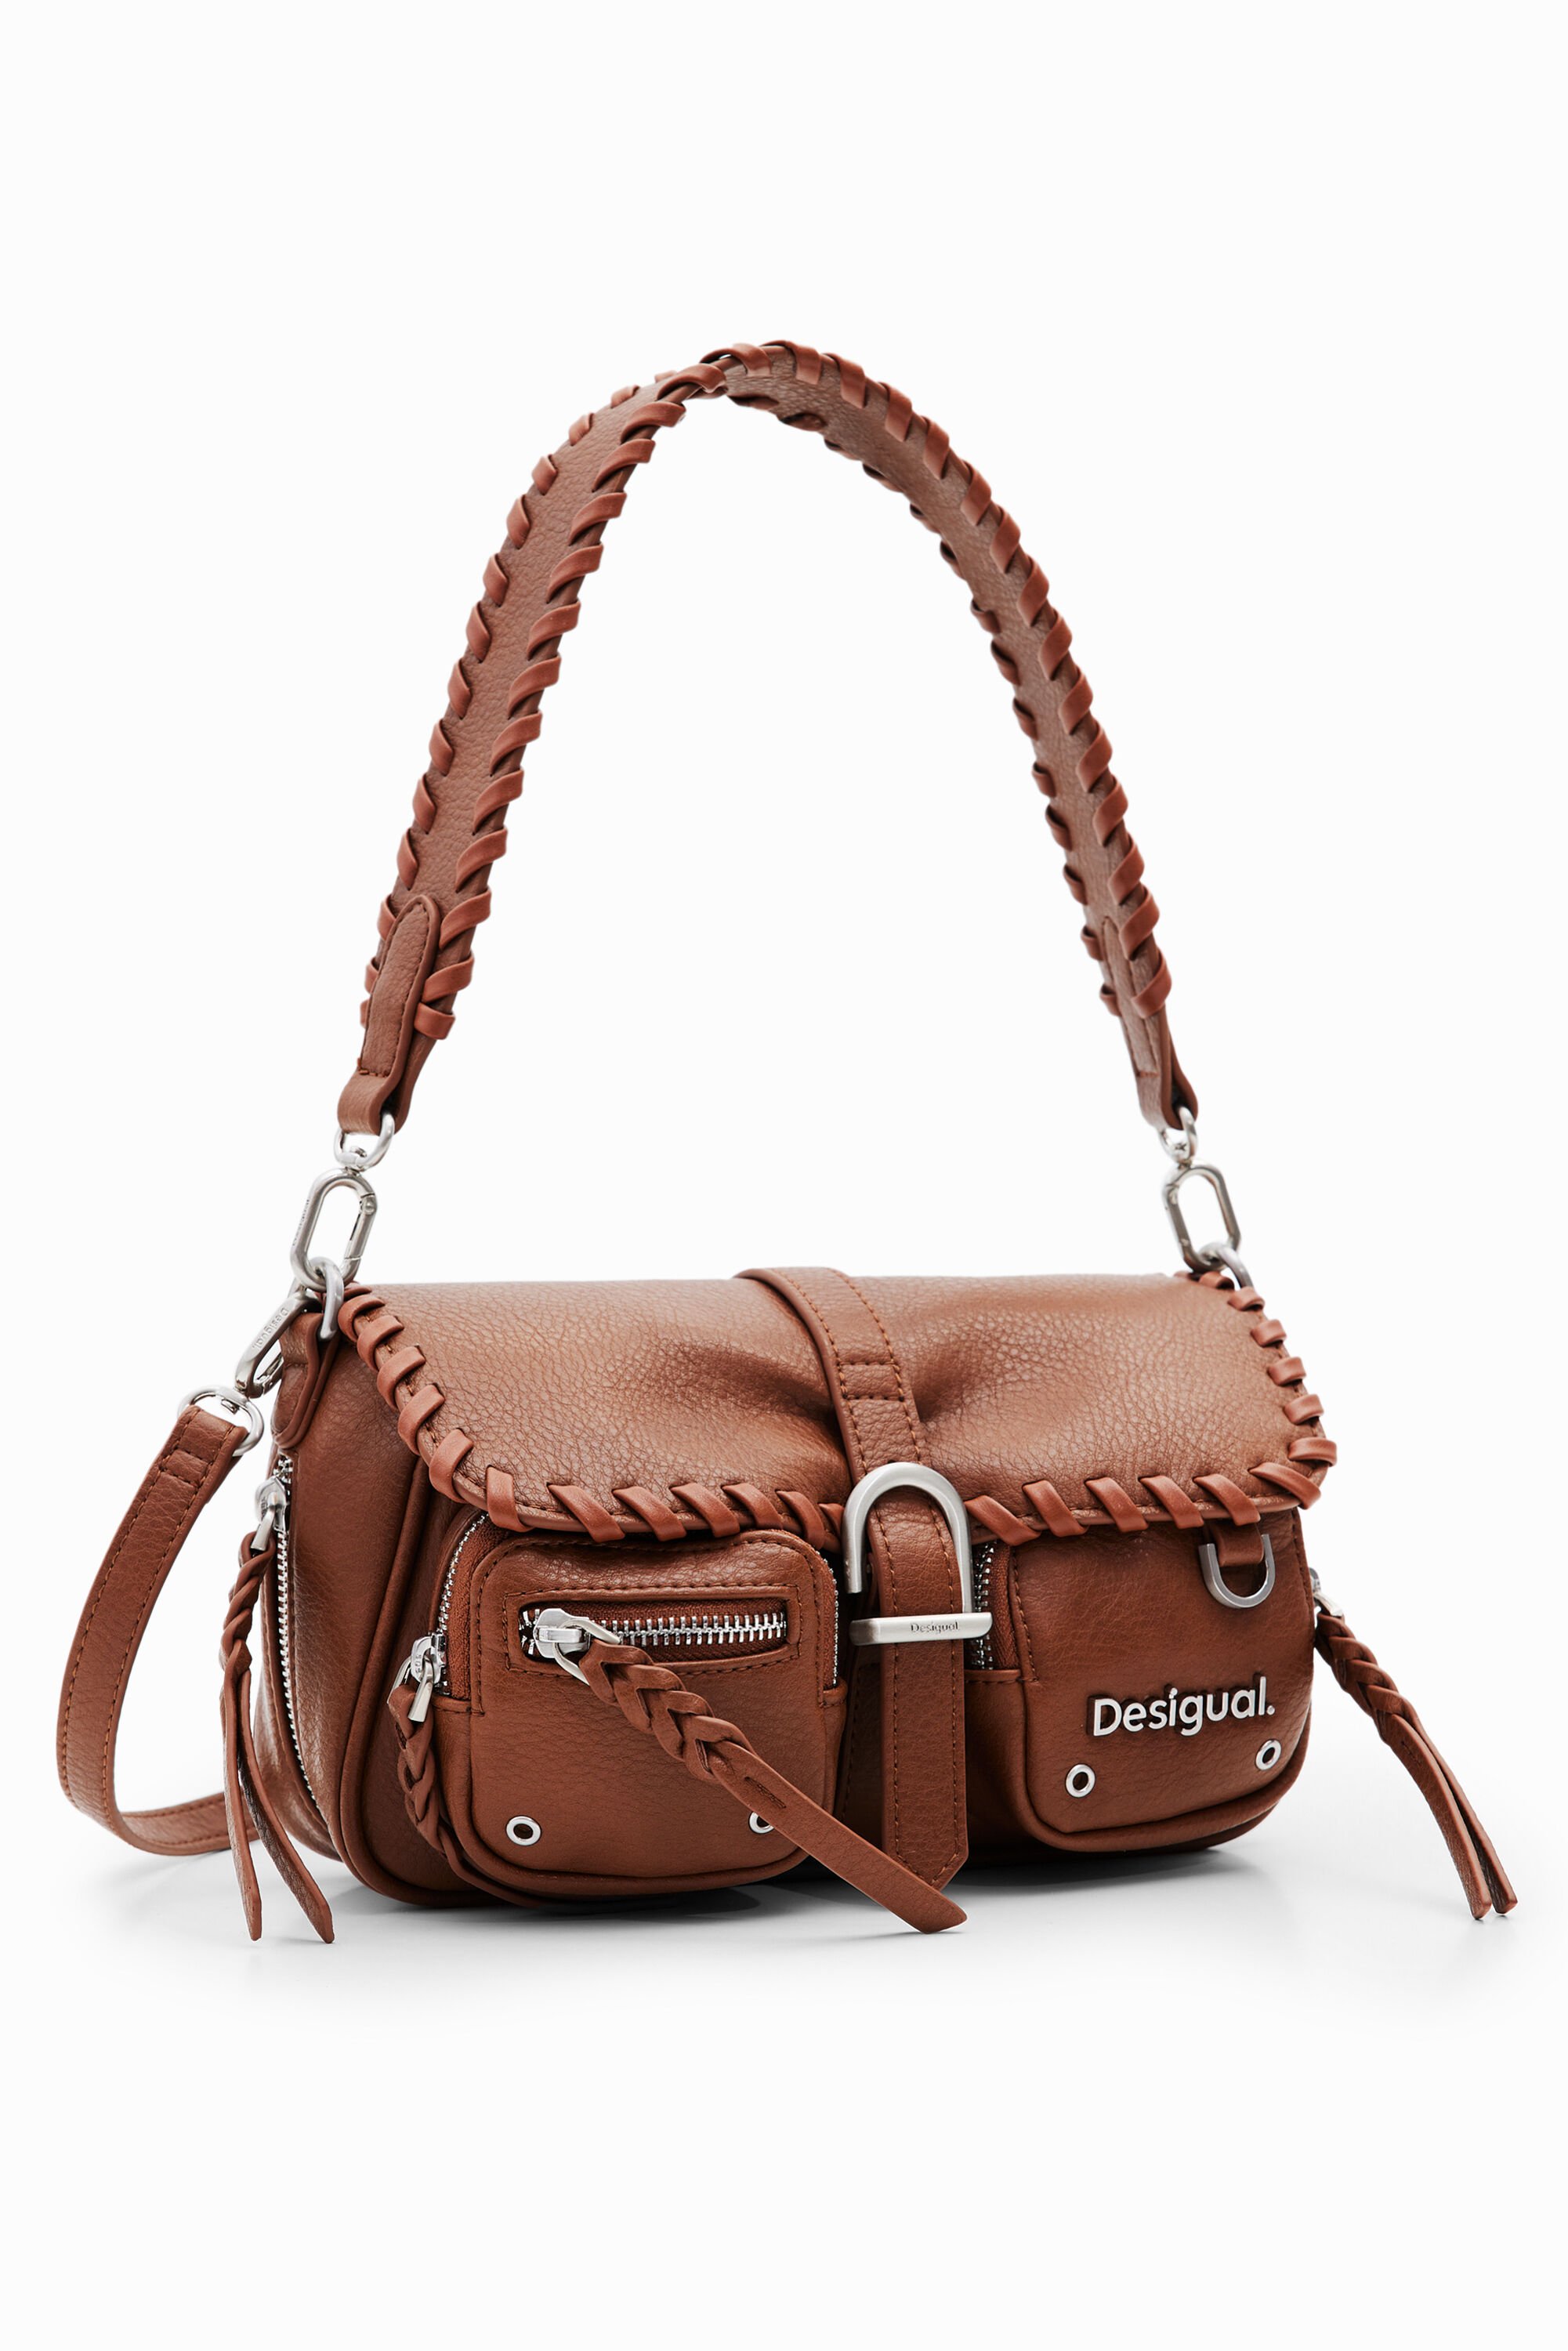 Desigual M Pockets Crossbody Bag In Brown